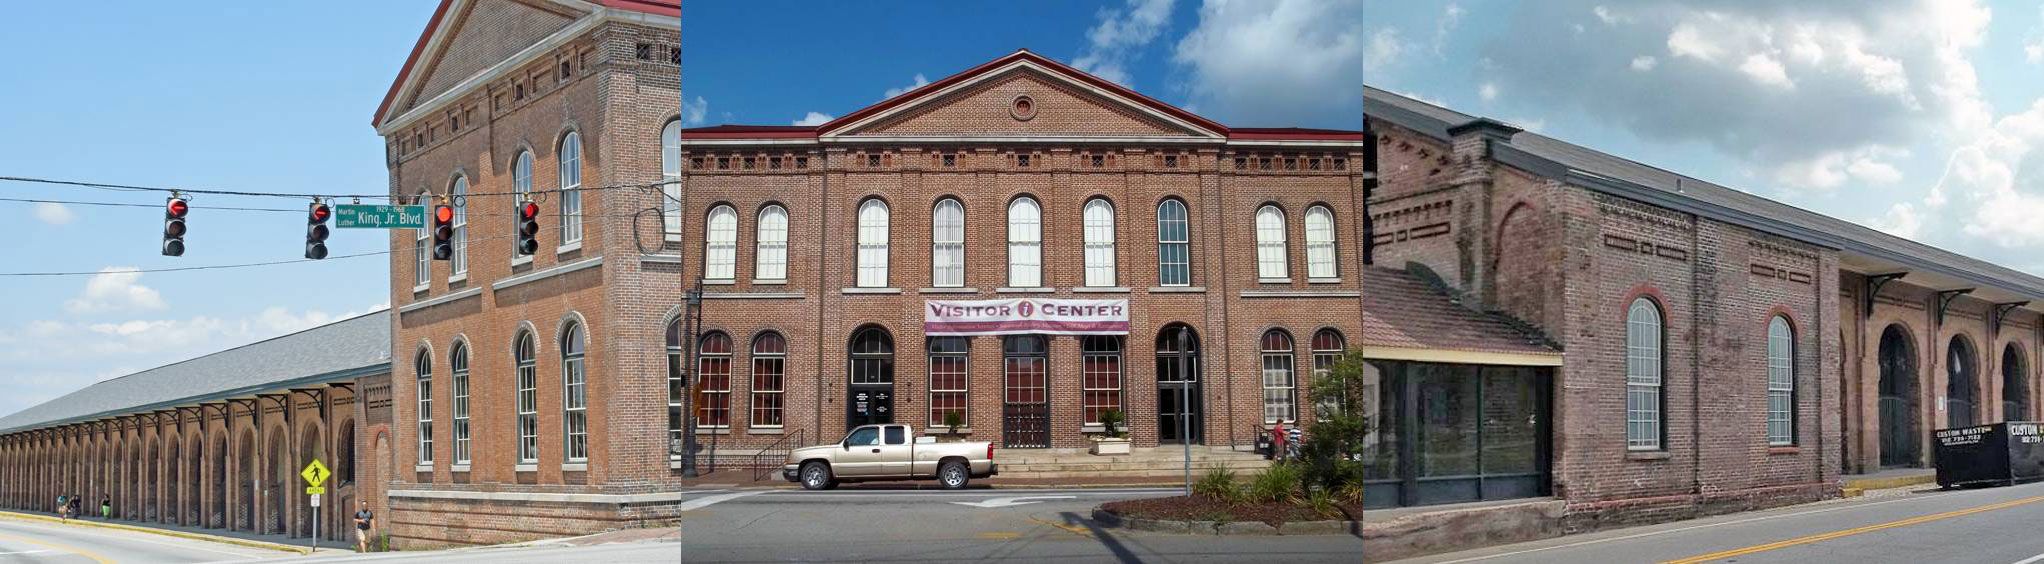 Savannah History Museum